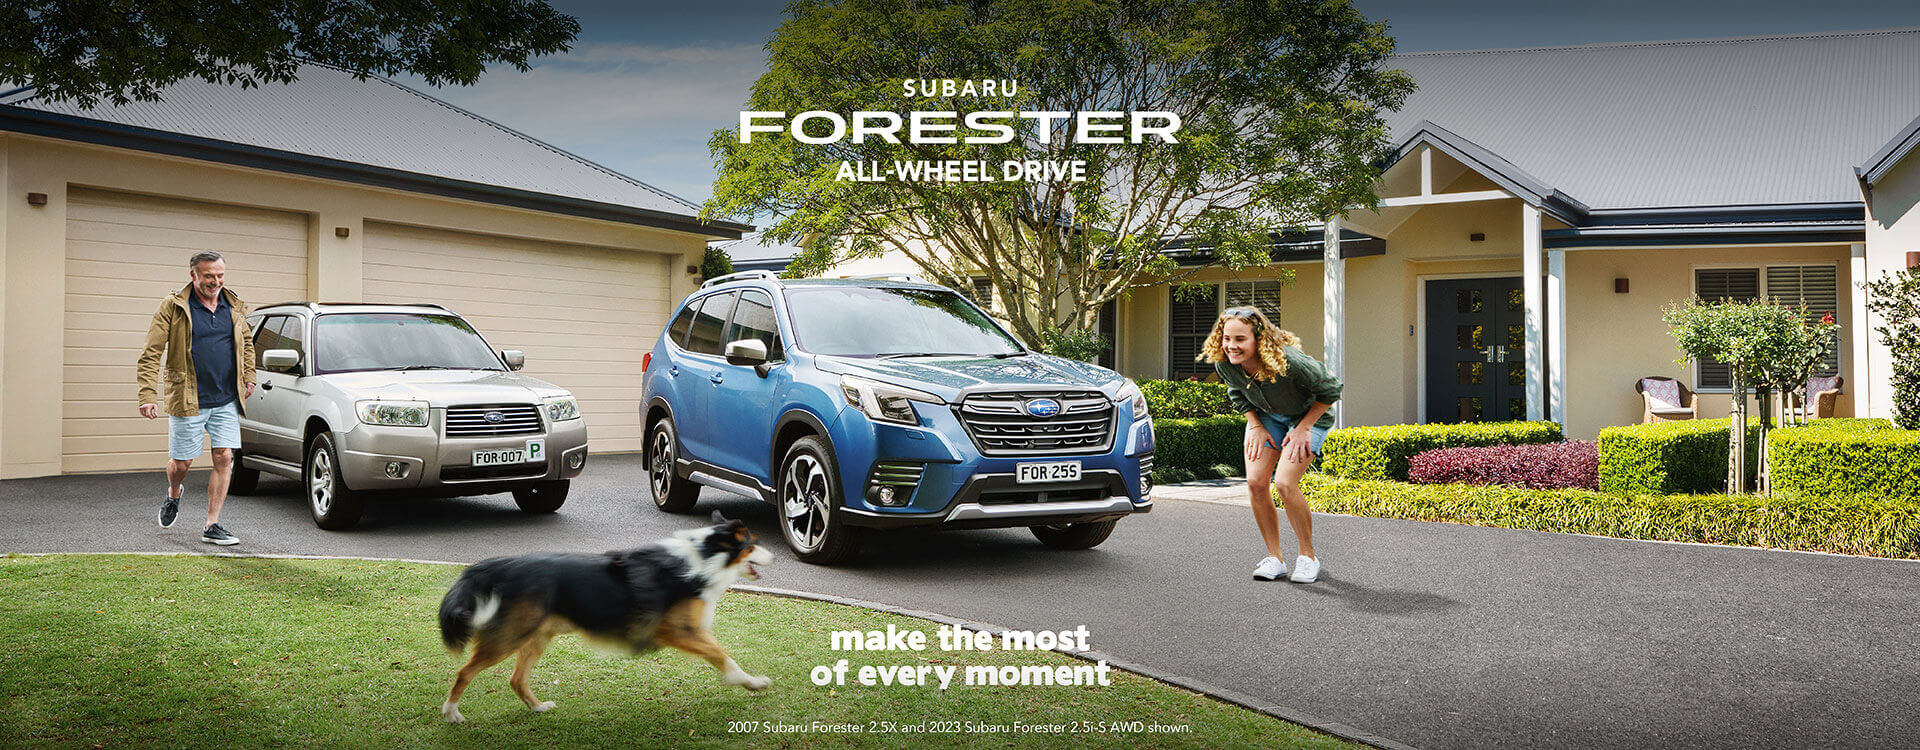 Subaru Forester Image